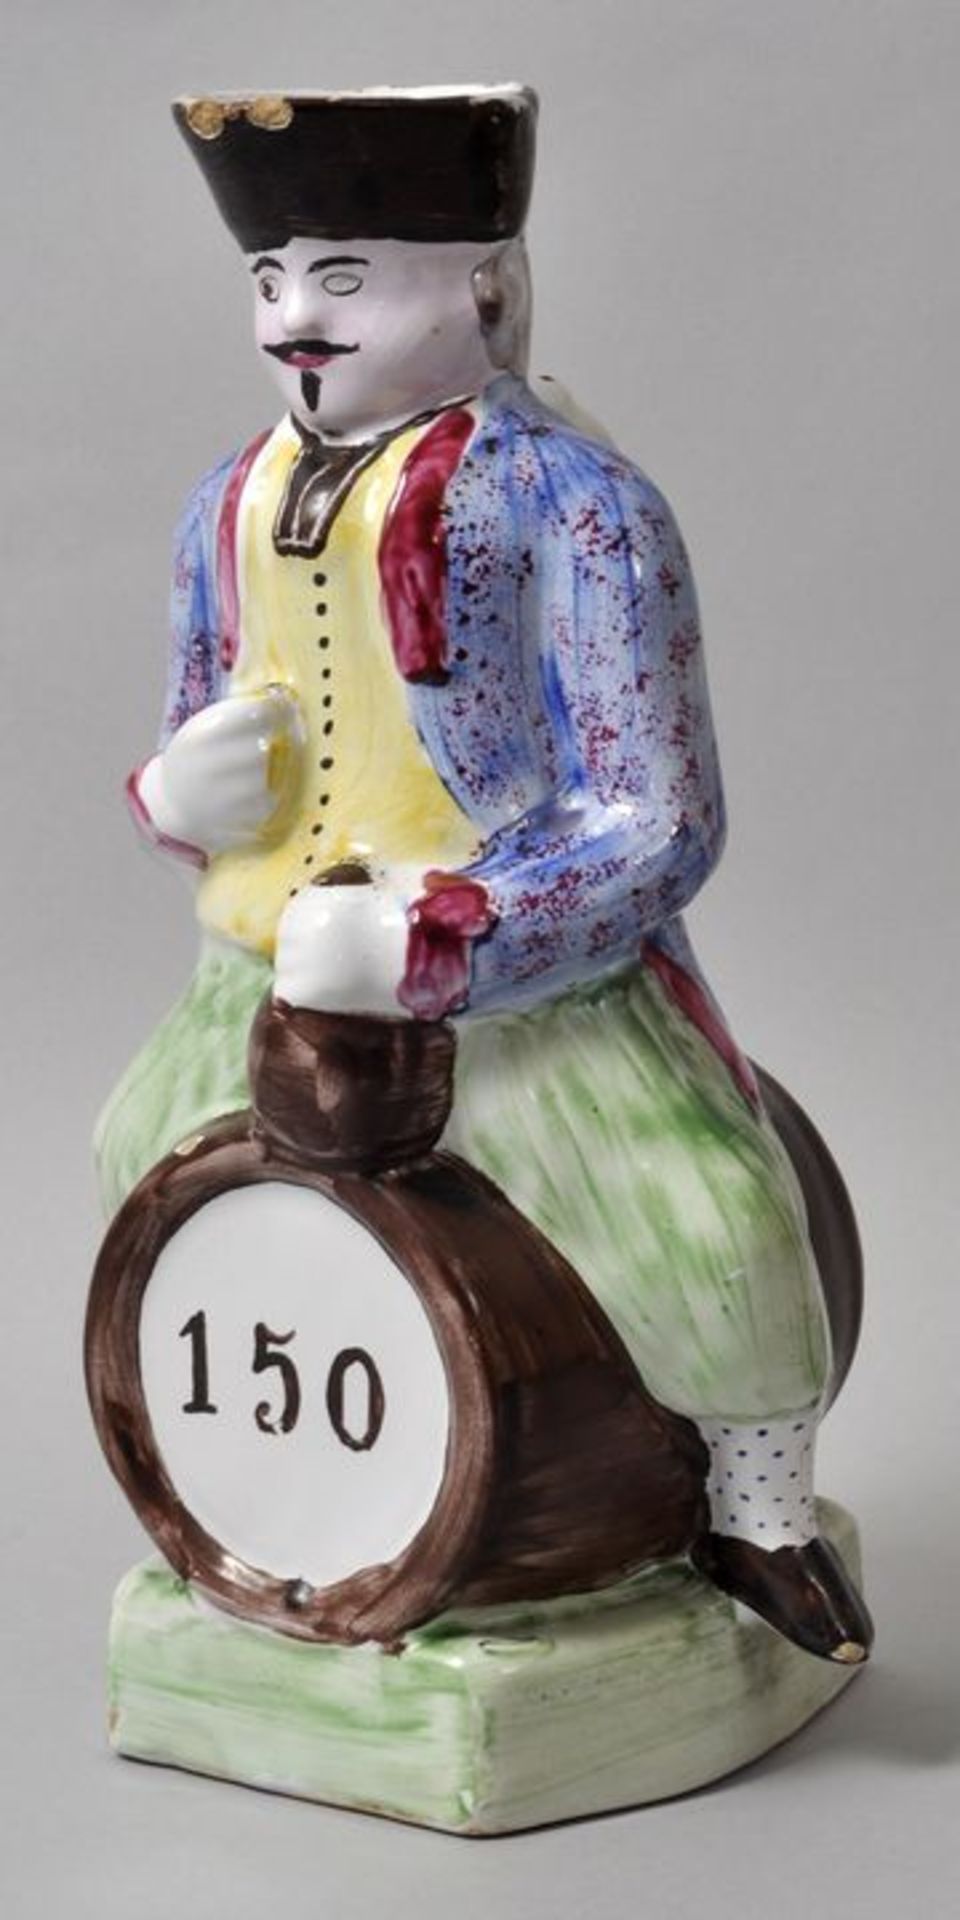 Figurenkrug/ Toby jug, wohl England, 19. Jh.Keramik, polychrome Bemalung. Gestalt eines Mannes mit